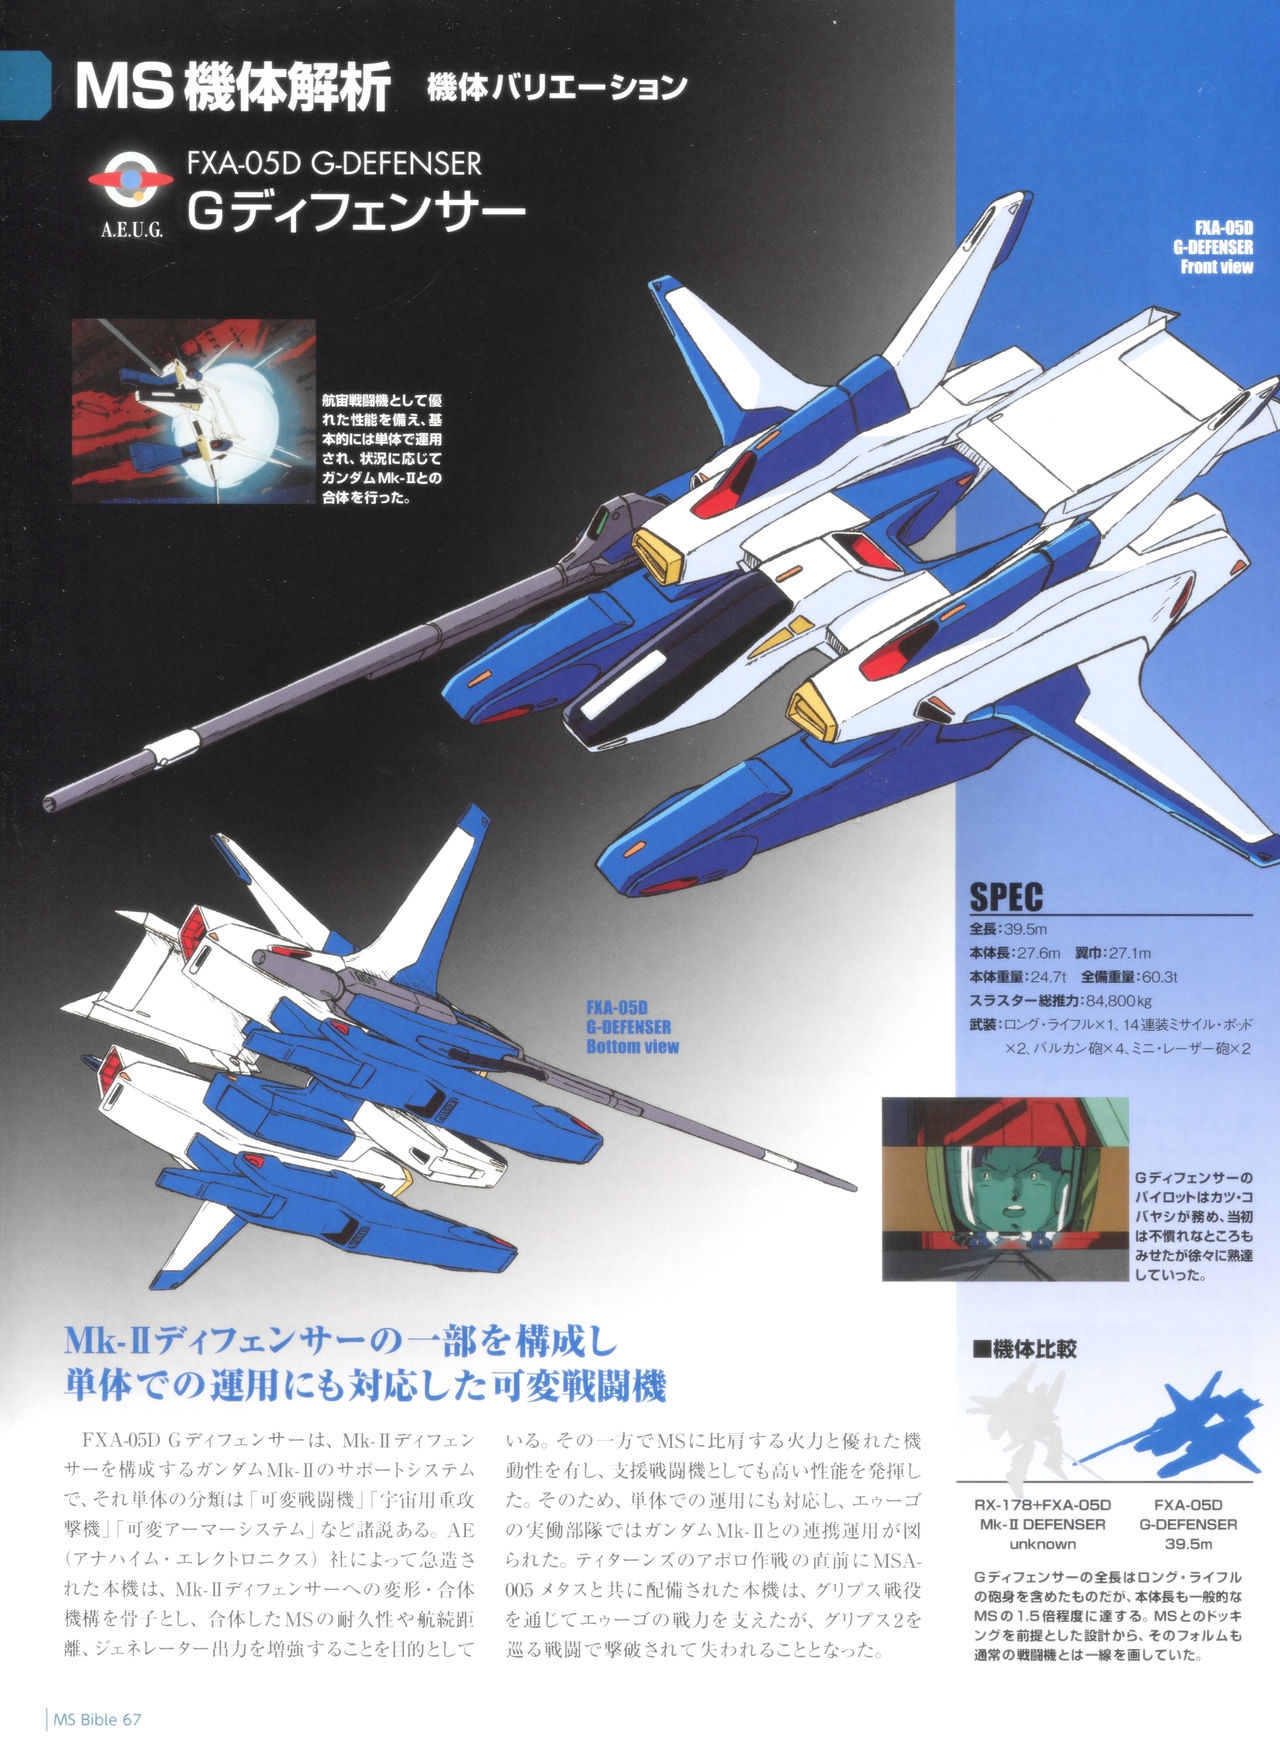 Gundam Mobile Suit Bible 67 10